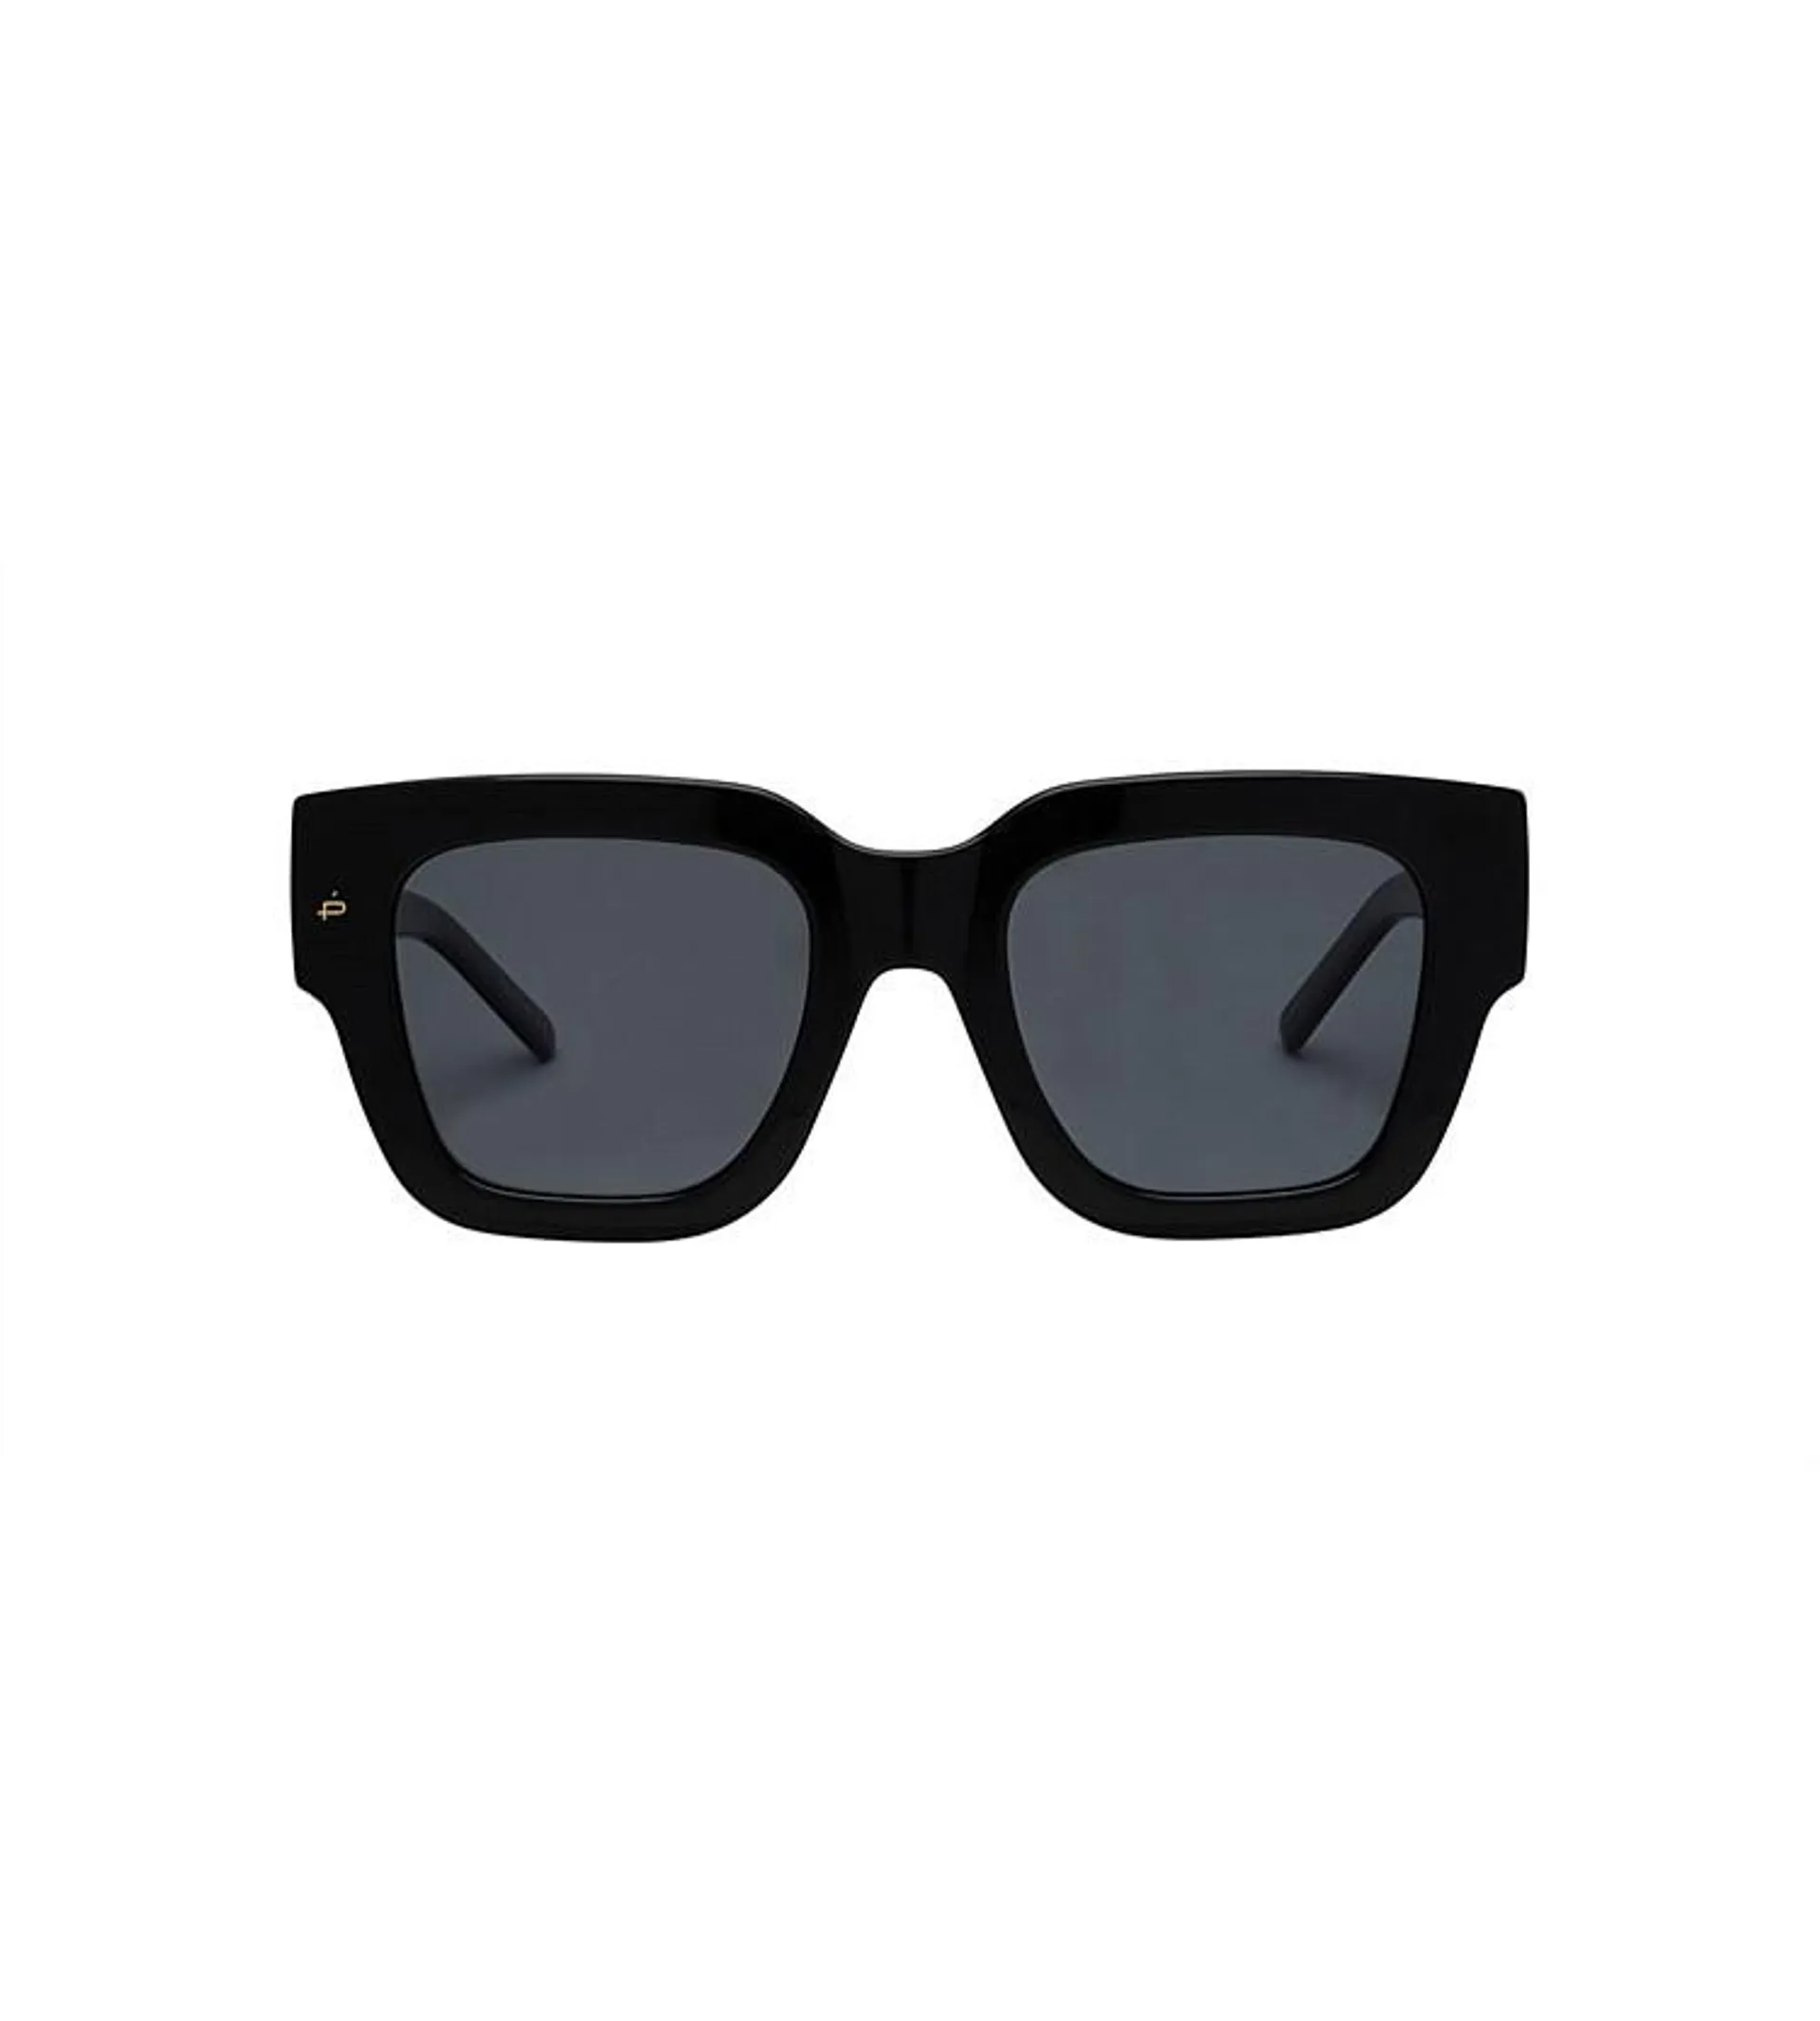 Prive New Yorker Sunglasses